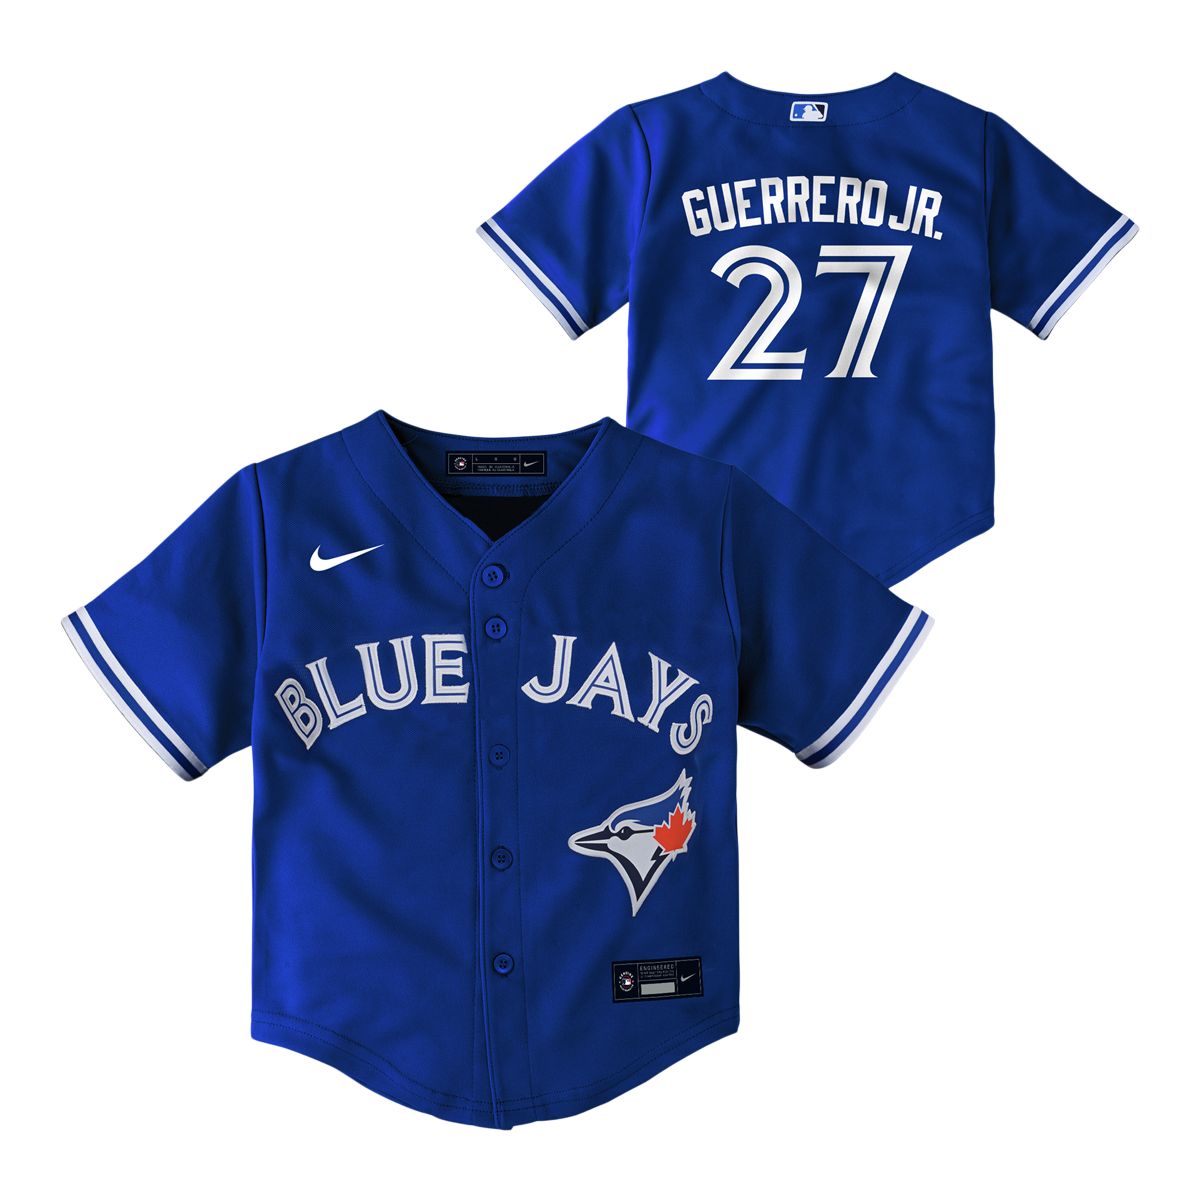 2023 Vladimir Guerrero Jr. Blue Replica Jersey Shirt Giveaways